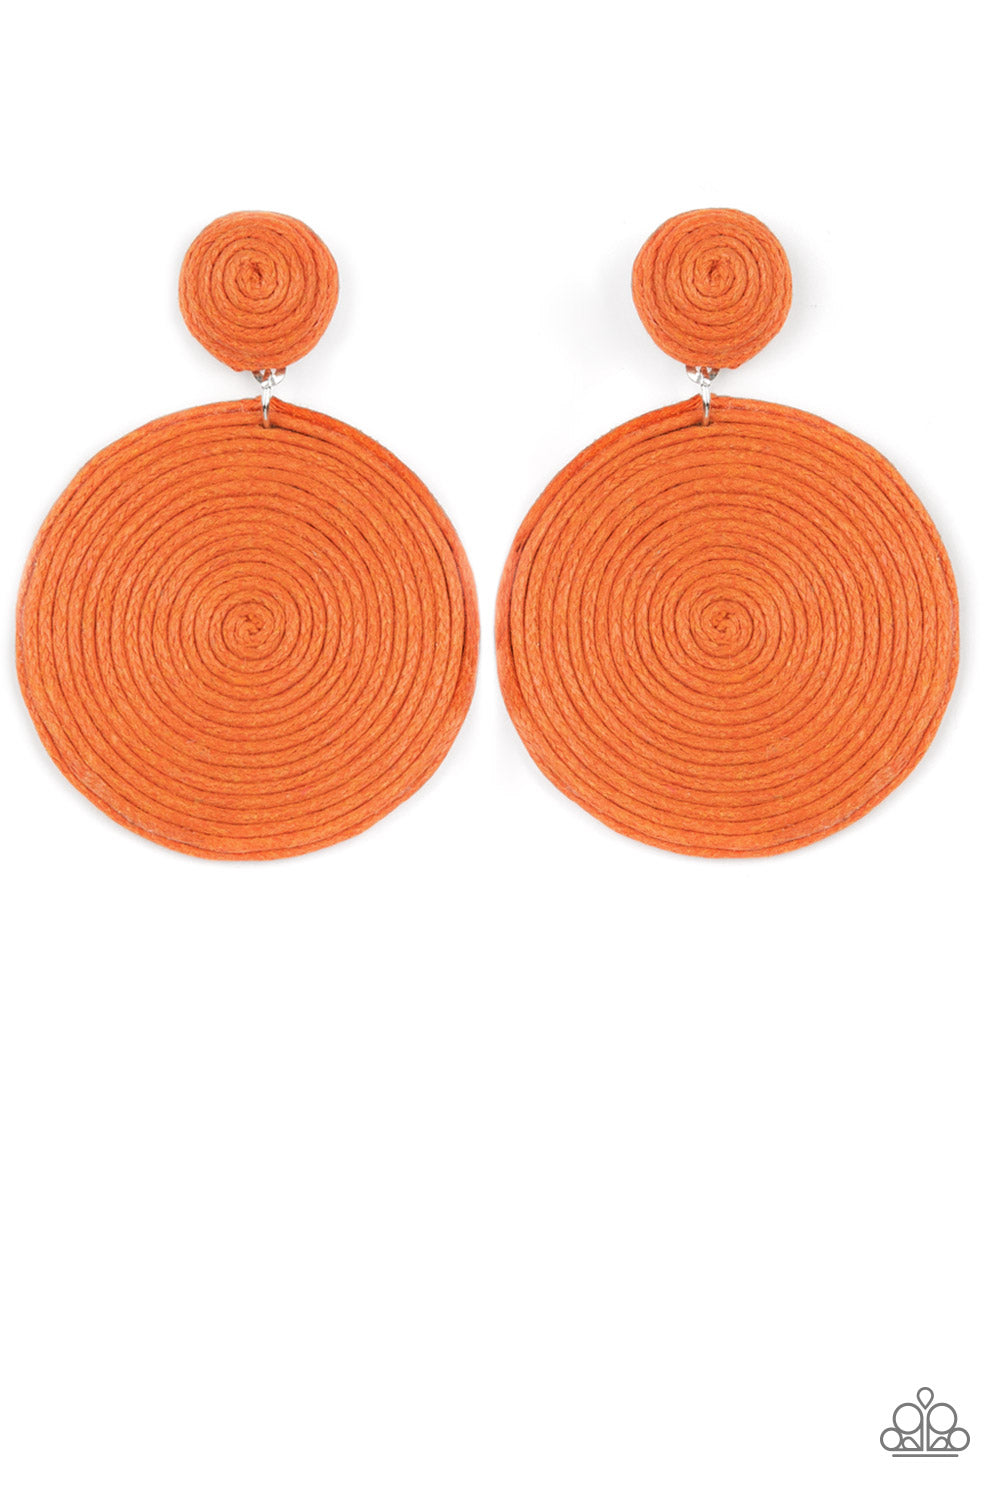 Circulate The Room - Orange Earrings - Paparazzi Accessories - Paparazzi Accessories 